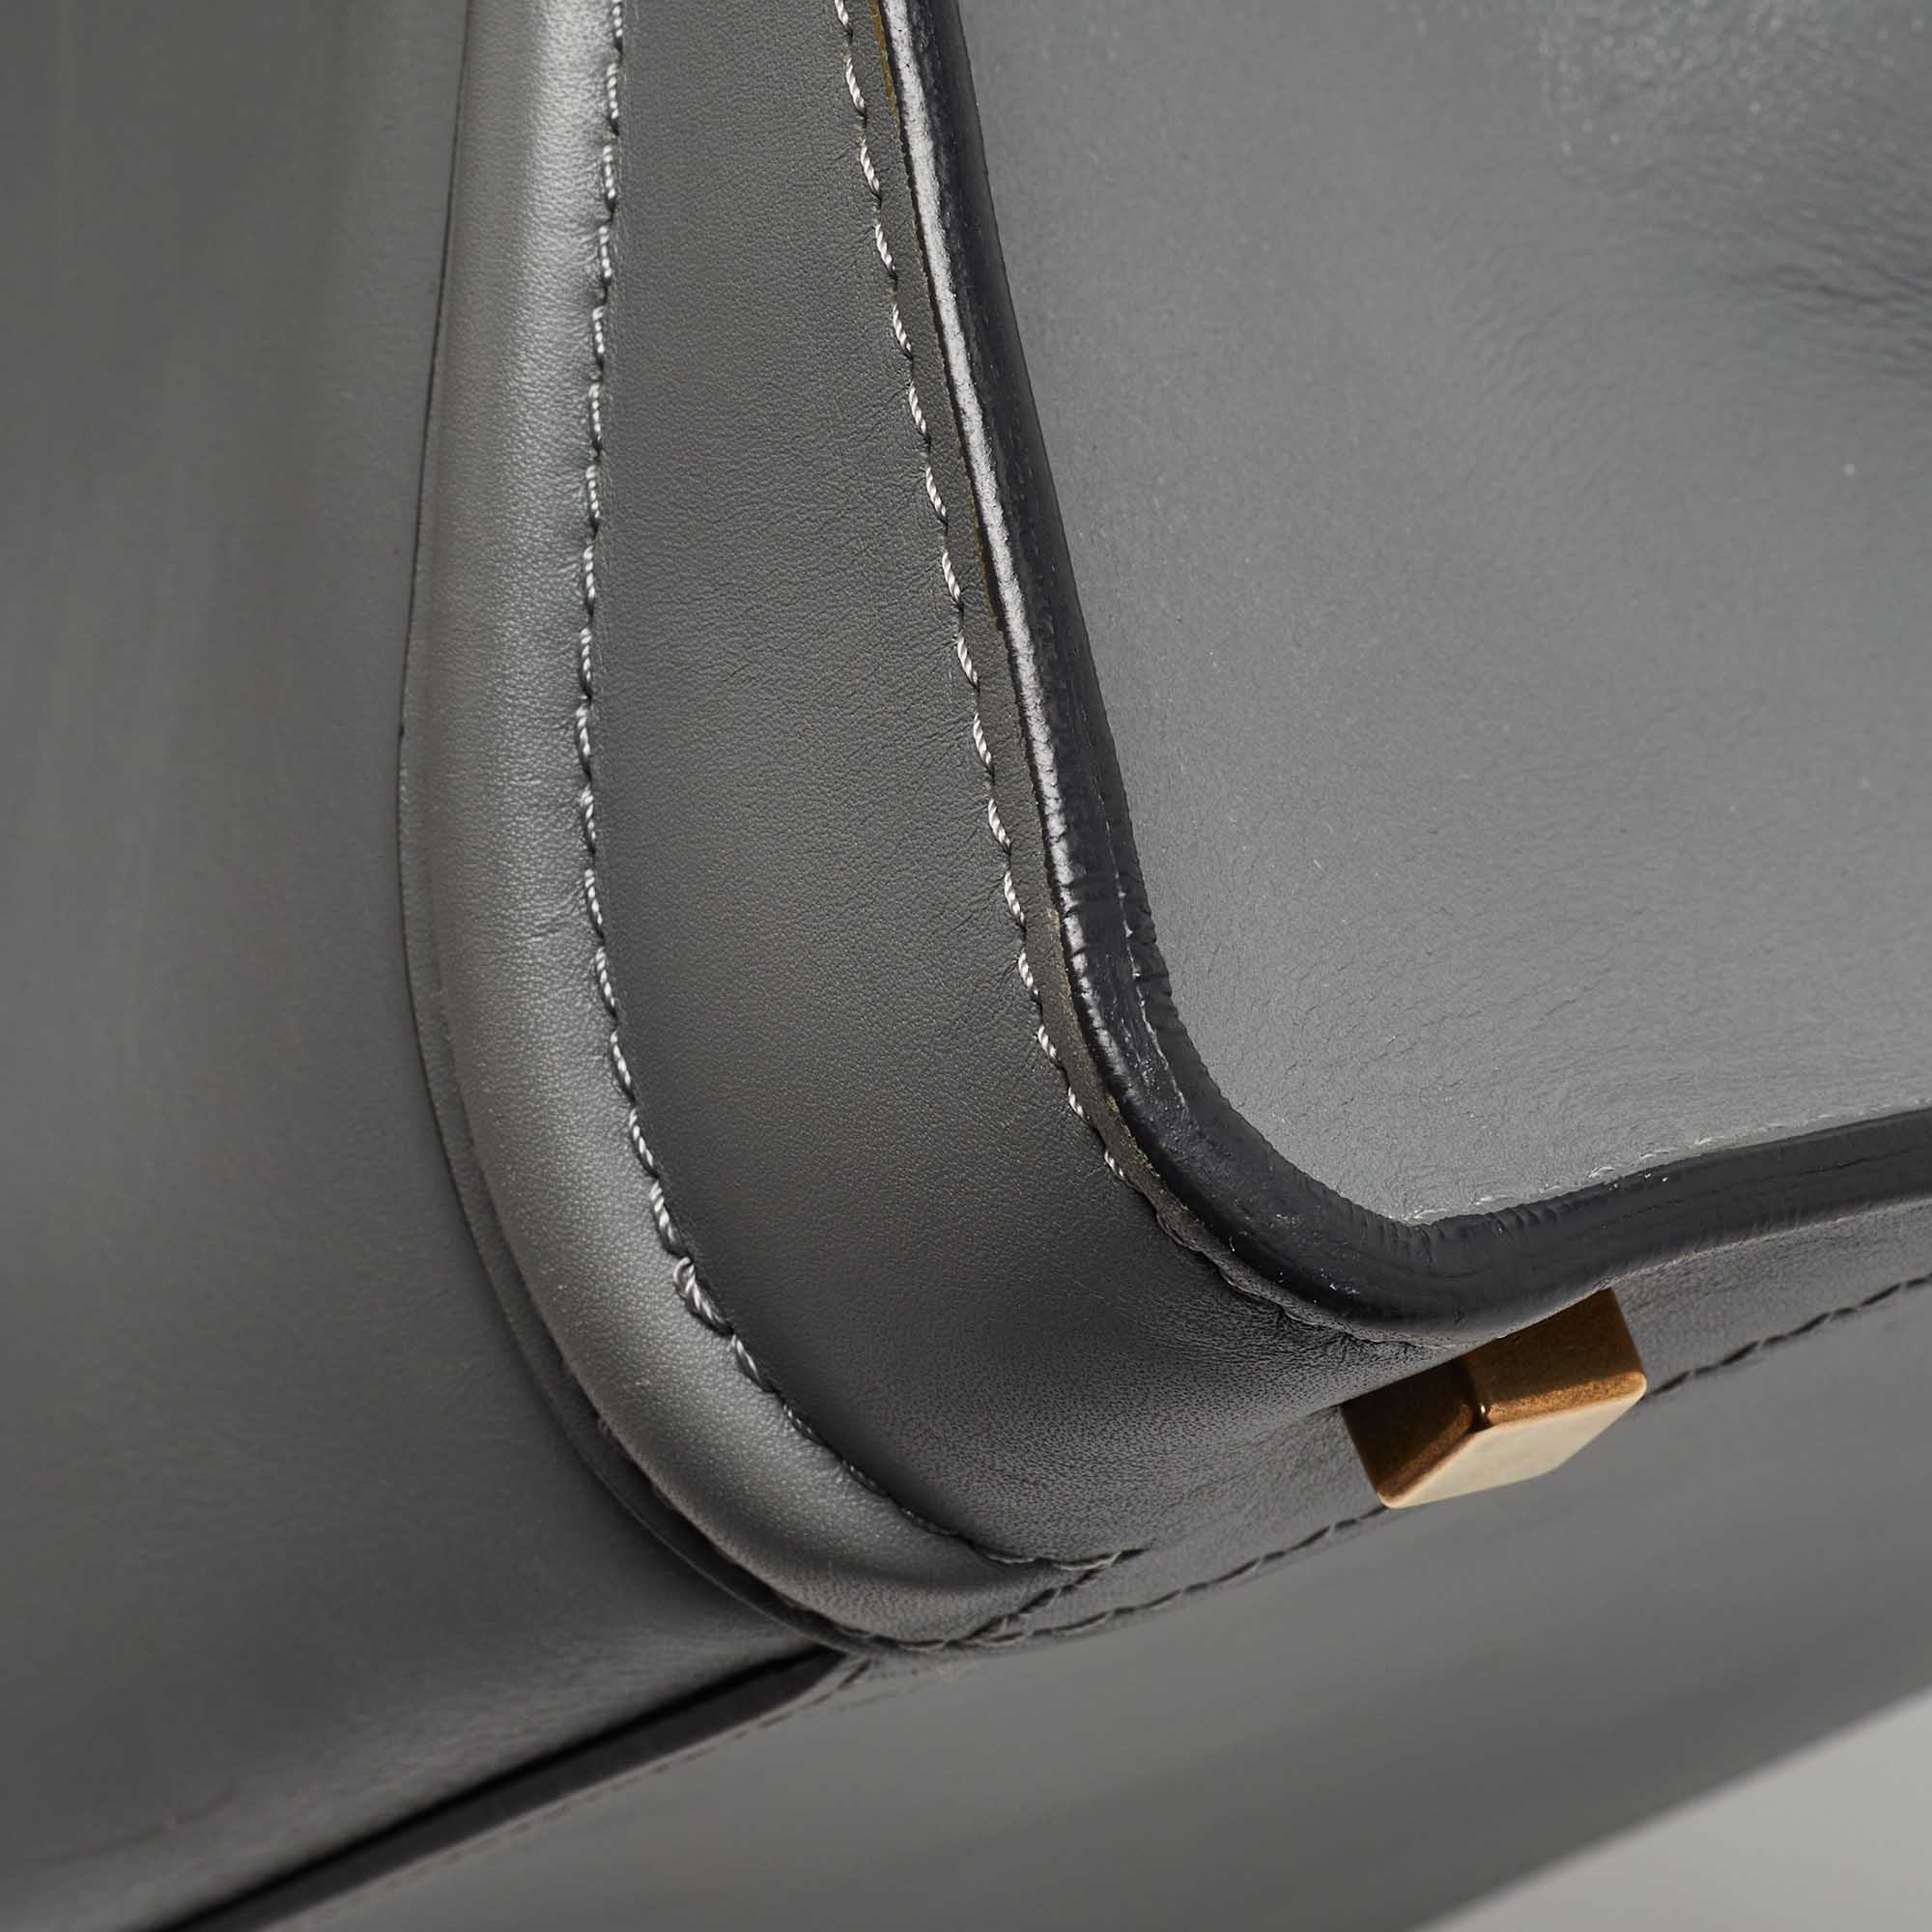 Celine Grey Leather Mini Luggage Tote